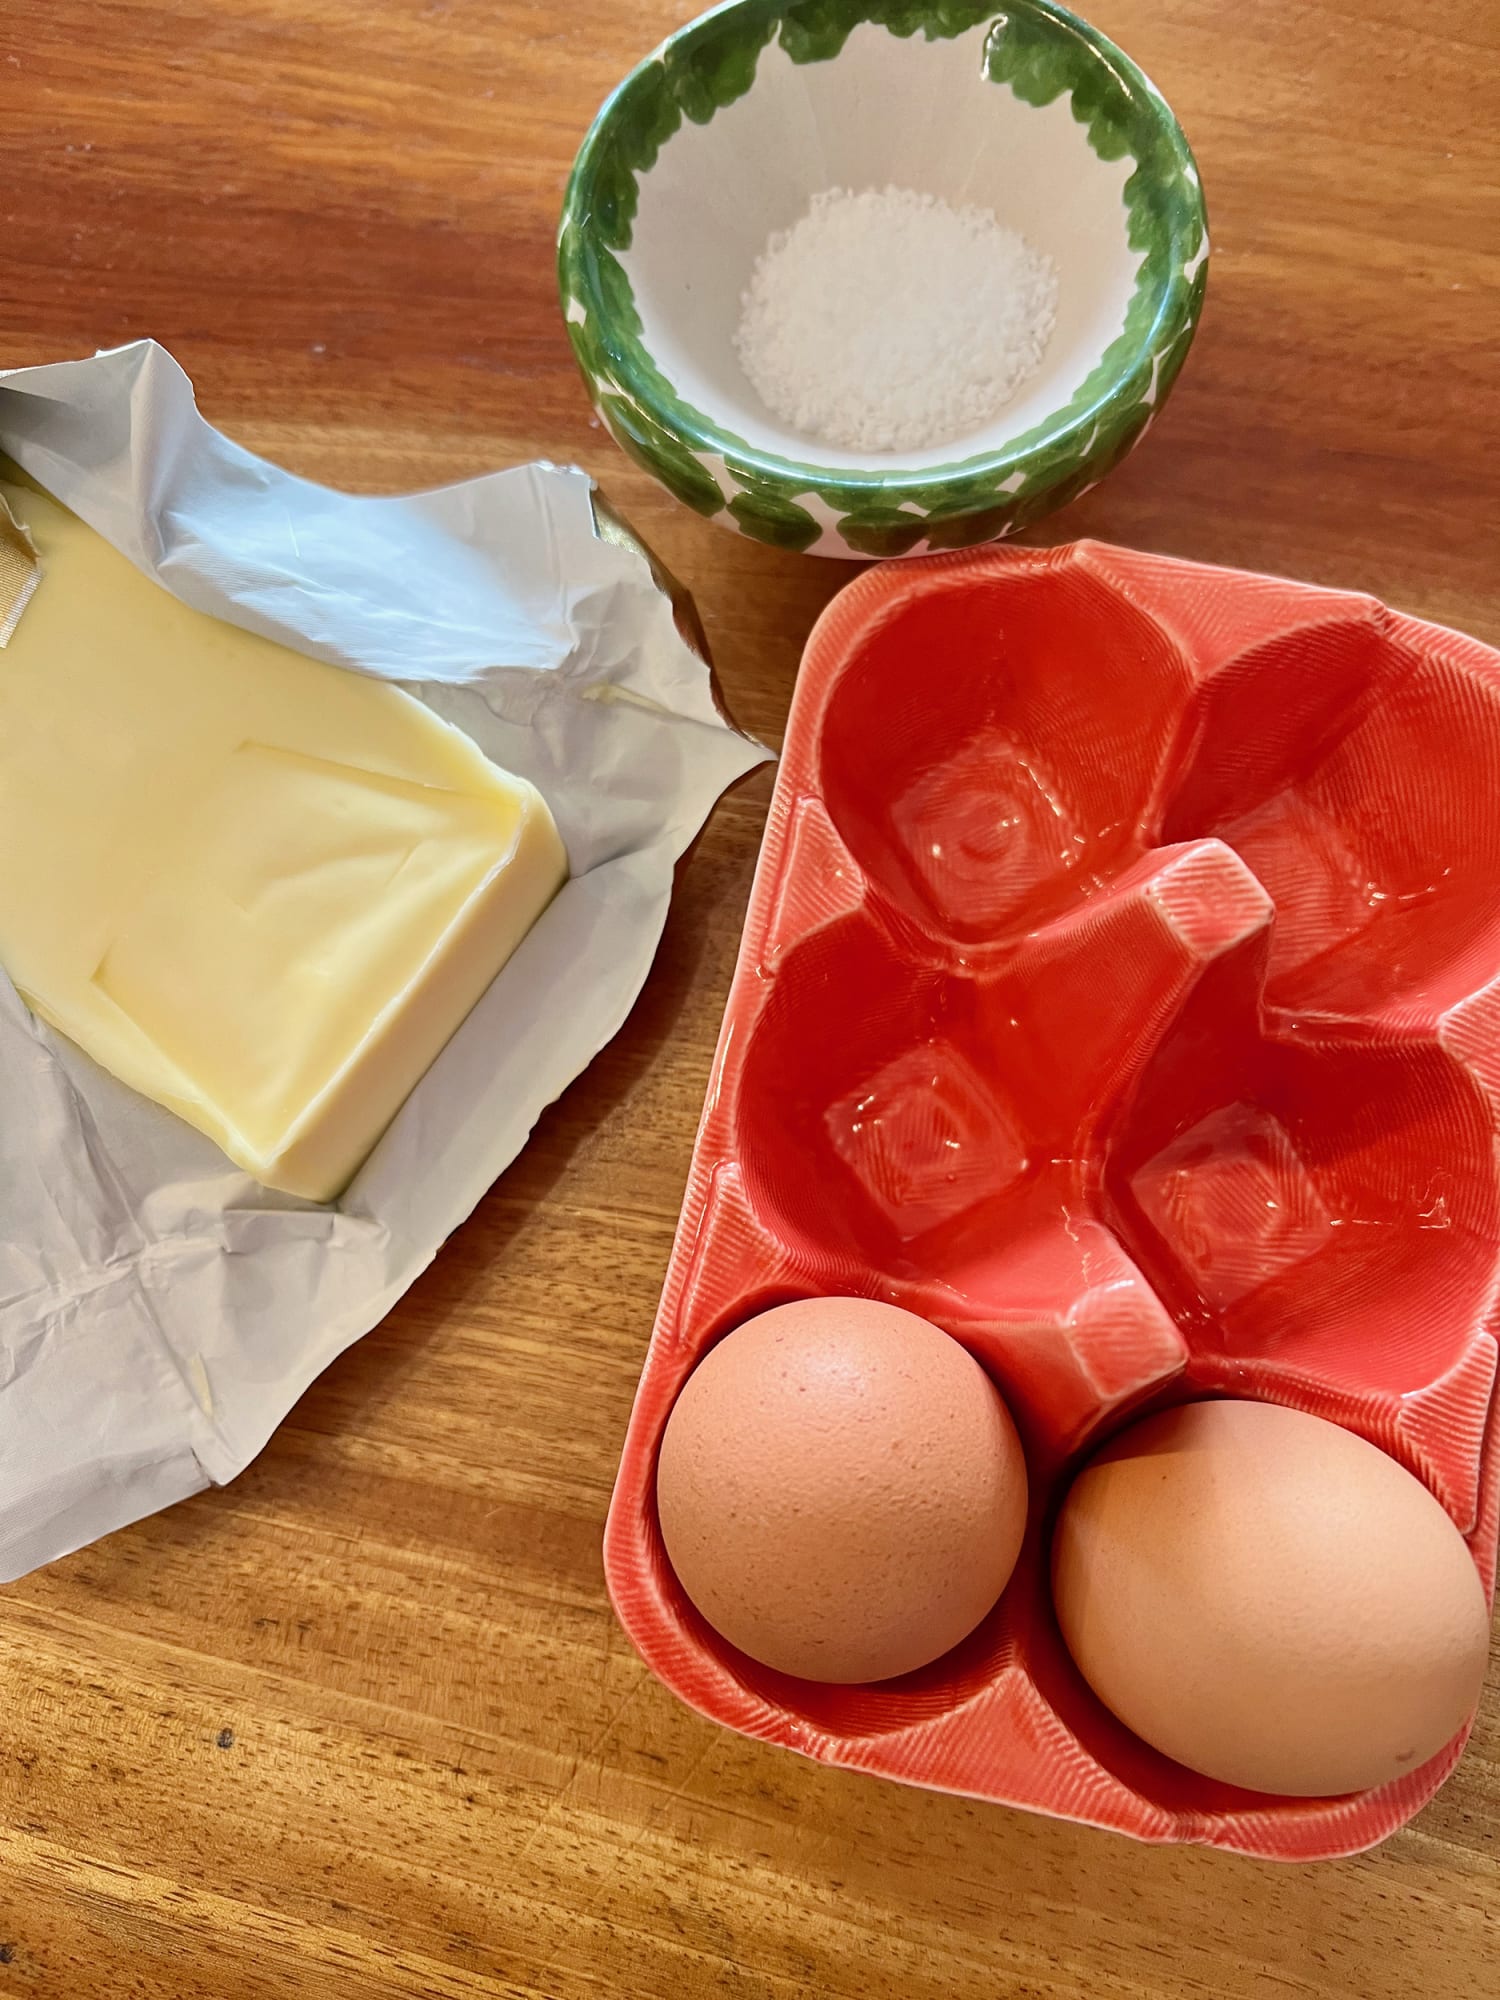 Perfect Over-Easy Eggs - Farmhouse on Boone